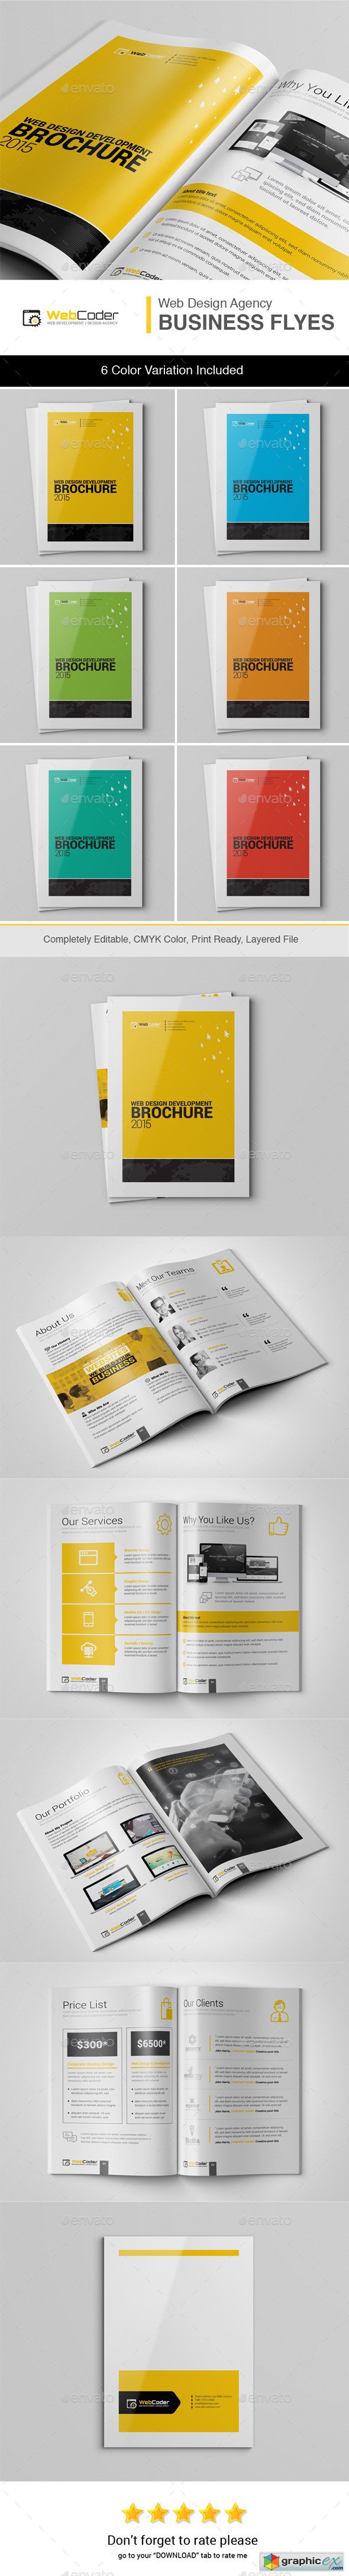 Web Design & Development Agency Bi-Fold Brochure